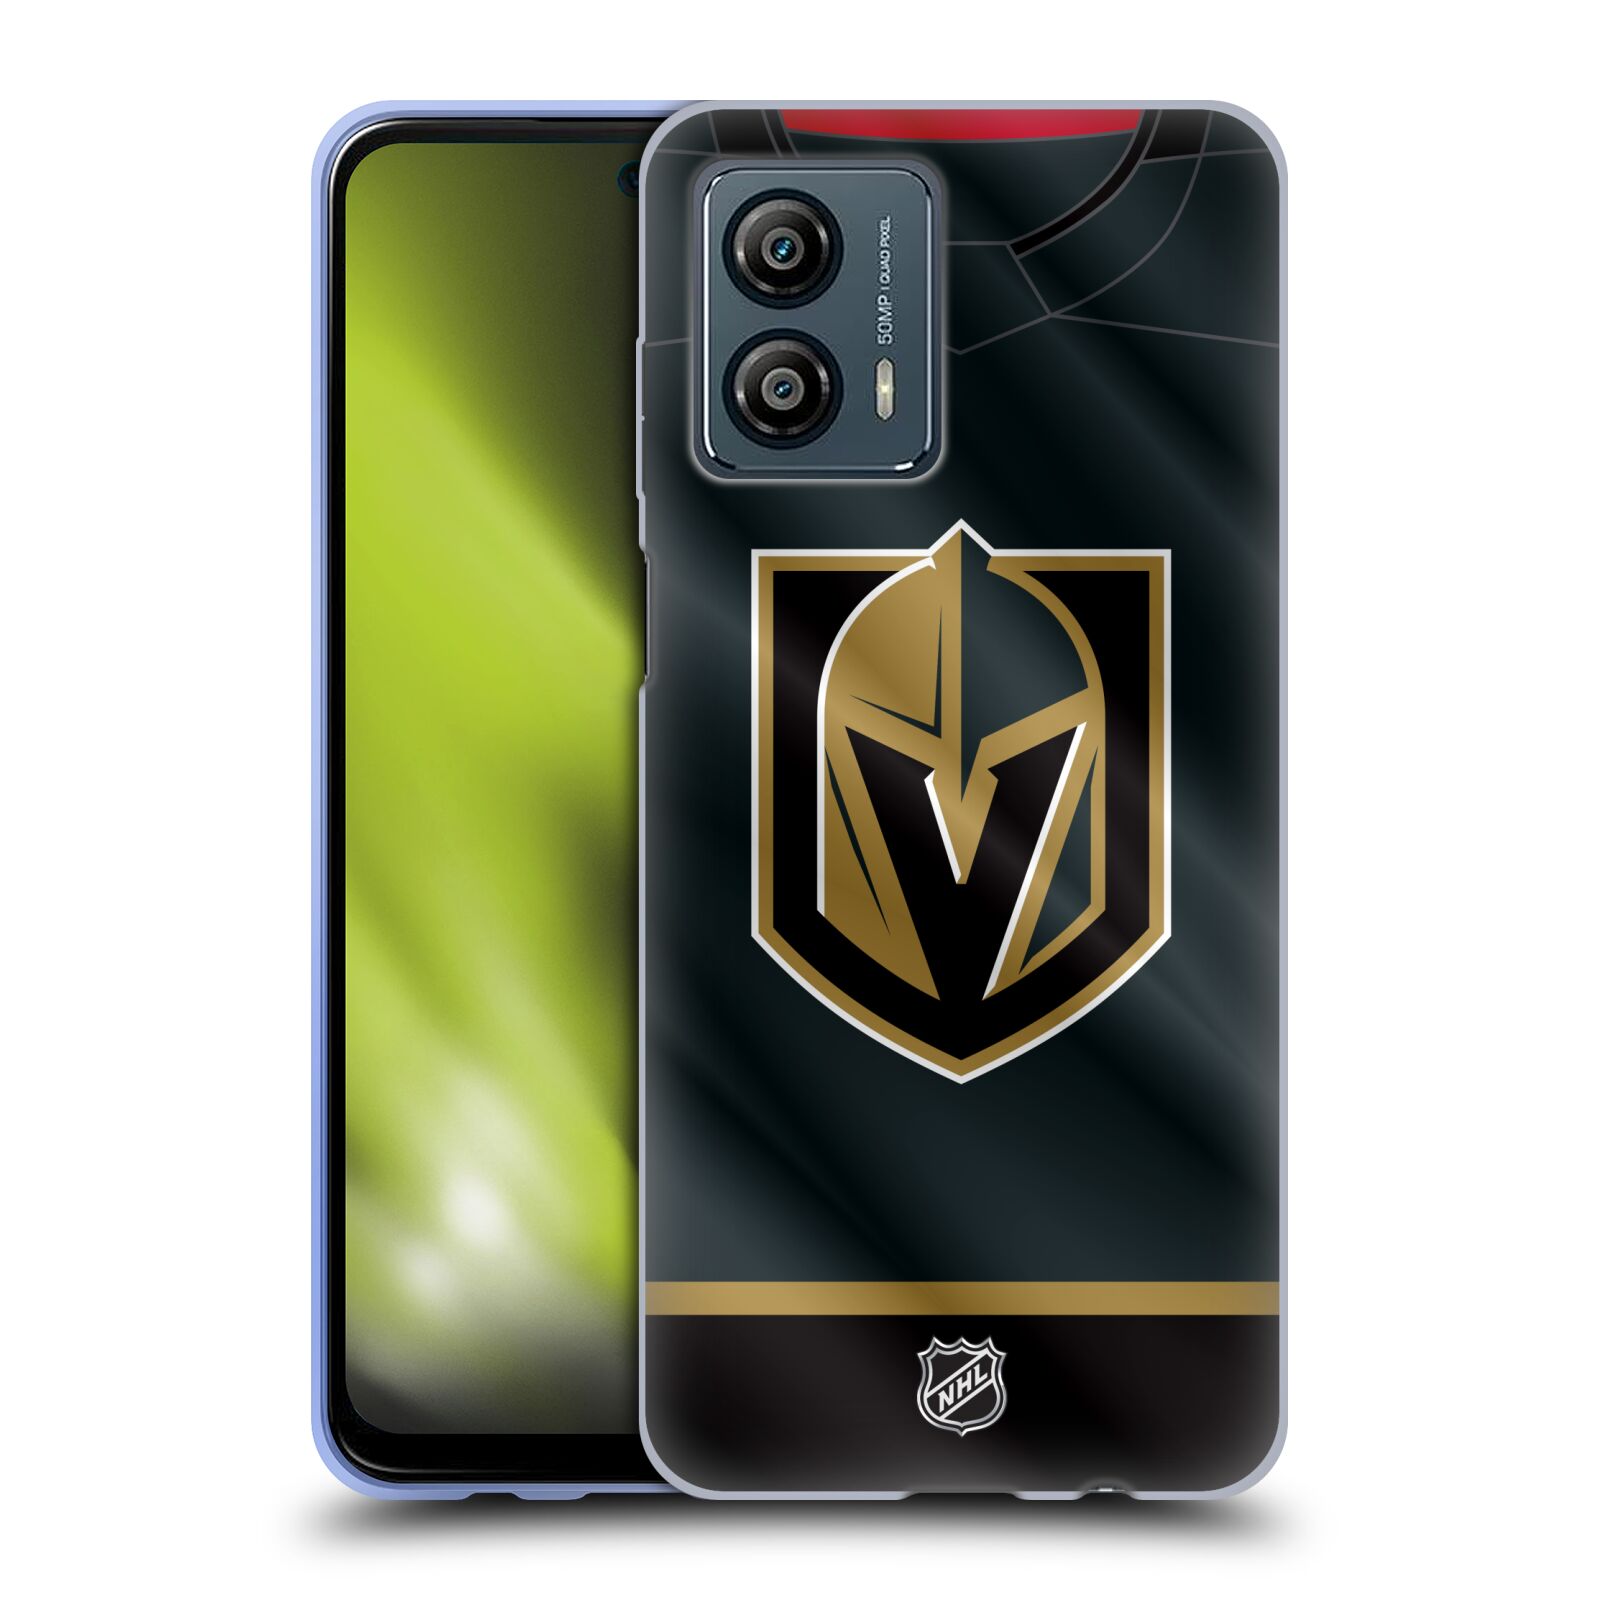 Silikonové pouzdro na mobil Motorola Moto G53 5G - NHL - Dres Vegas Golden Knights (Silikonový kryt, obal, pouzdro na mobilní telefon Motorola Moto G53 5G s licencovaným motivem NHL - Dres Vegas Golden Knights)